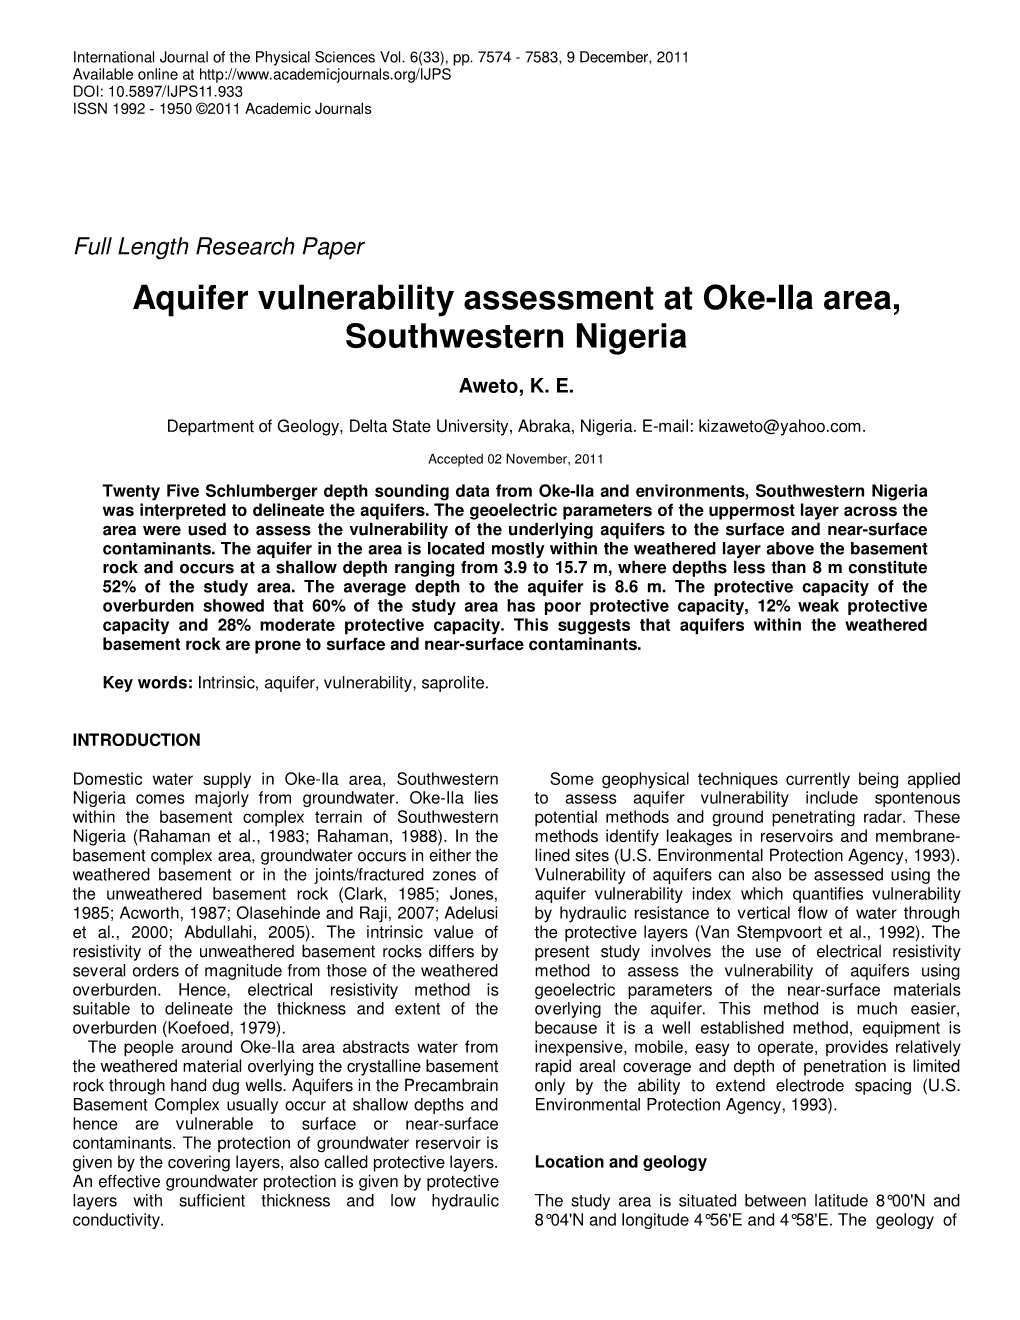 Aquifer Vulnerability Assessment at Oke-Ila Area, Southwestern Nigeria